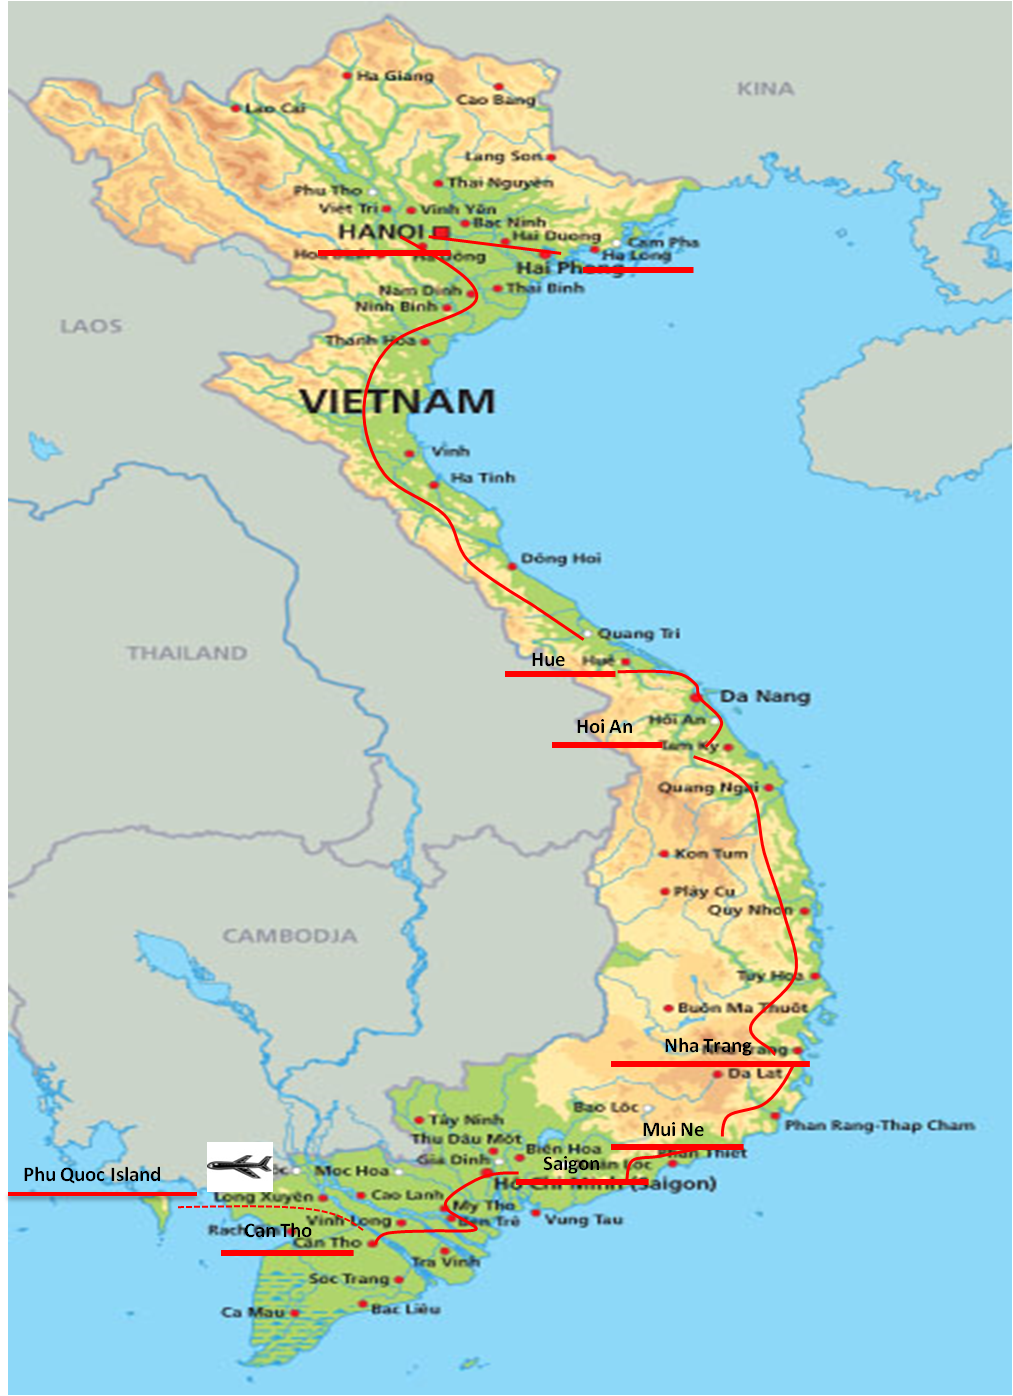 Kort Over Vietnam Og Cambodia Vietnam Kort Over | stoffeerderijrozendal Kort Over Vietnam Og Cambodia